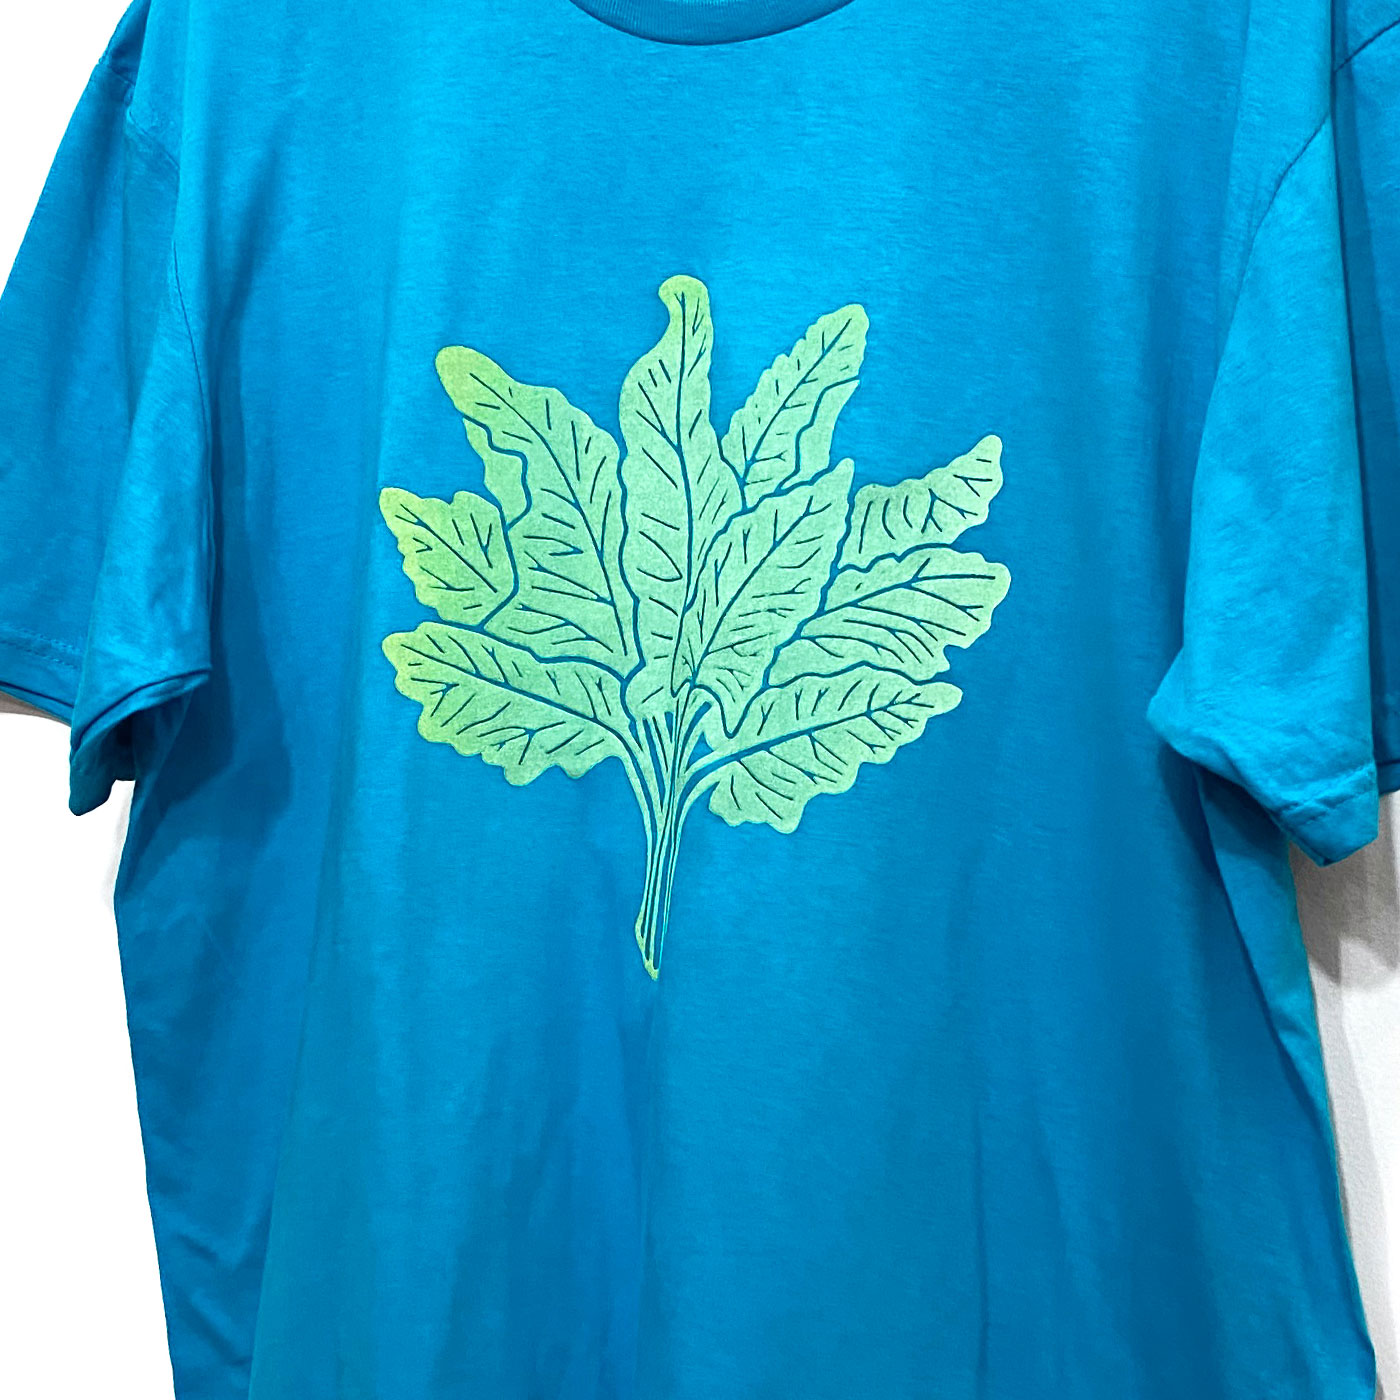 Green Swiss Chard on Turquoise T-Shirt